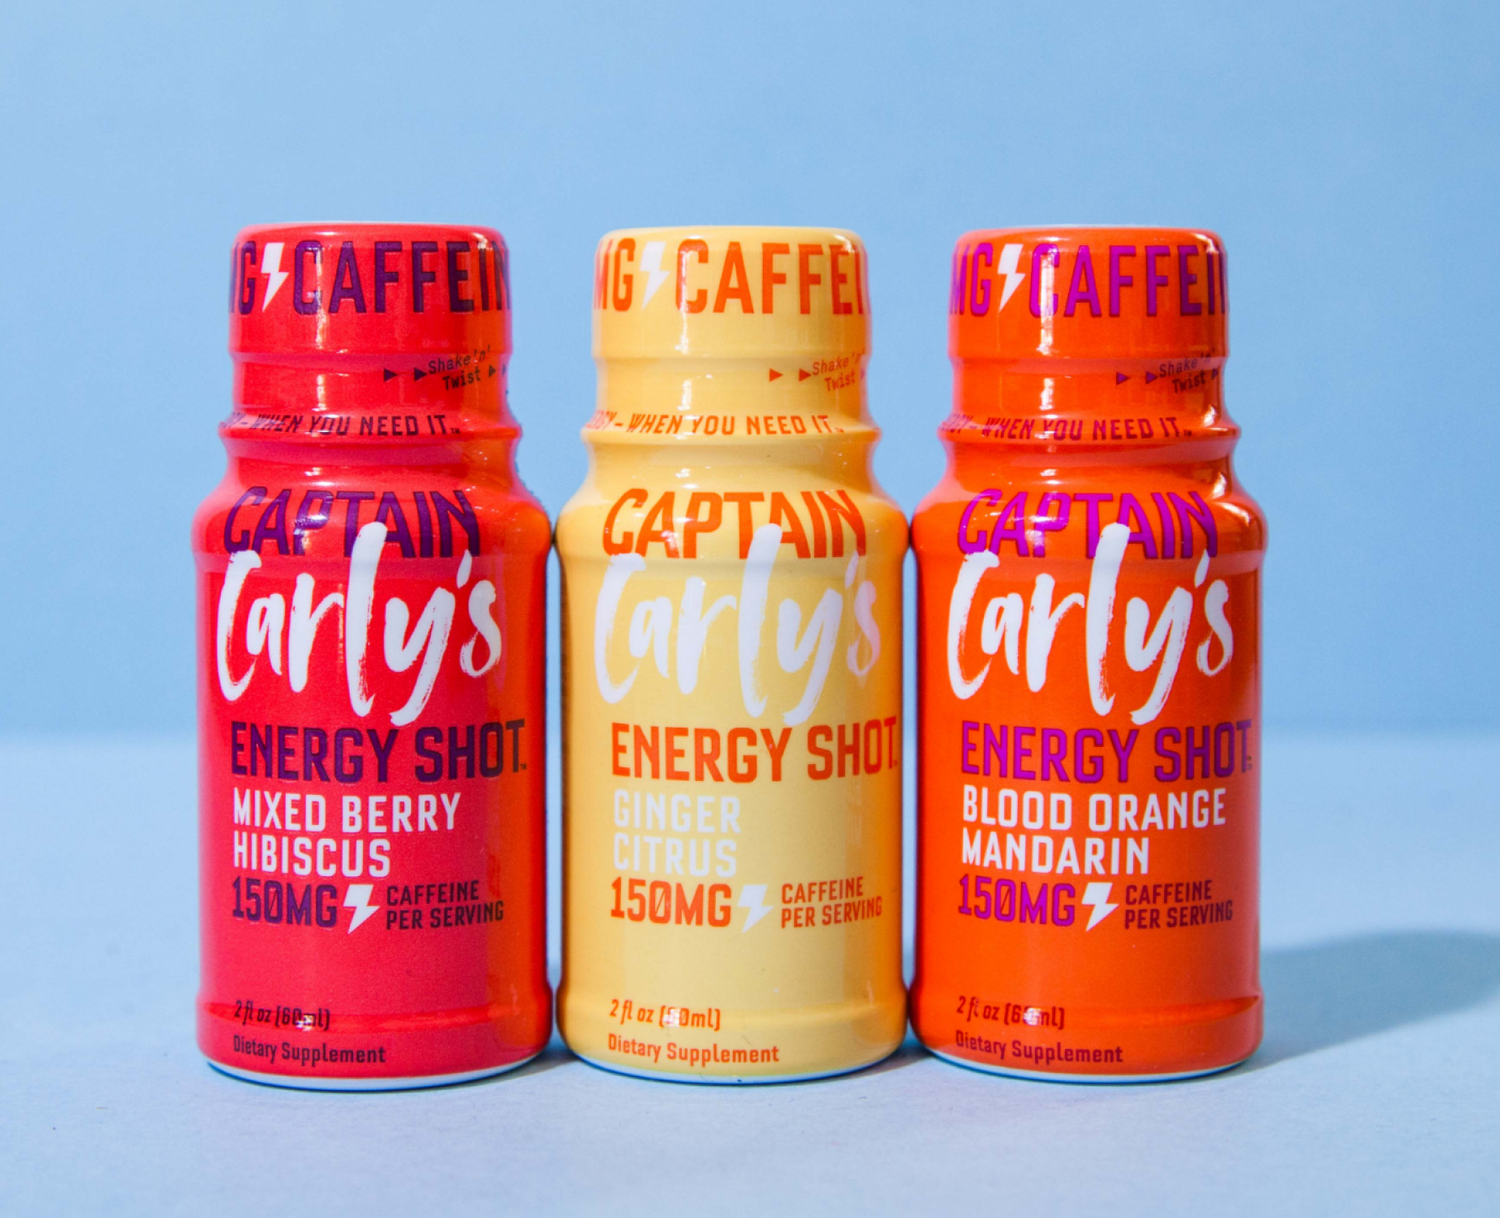 Carly's Energy Shots Sampler Pack